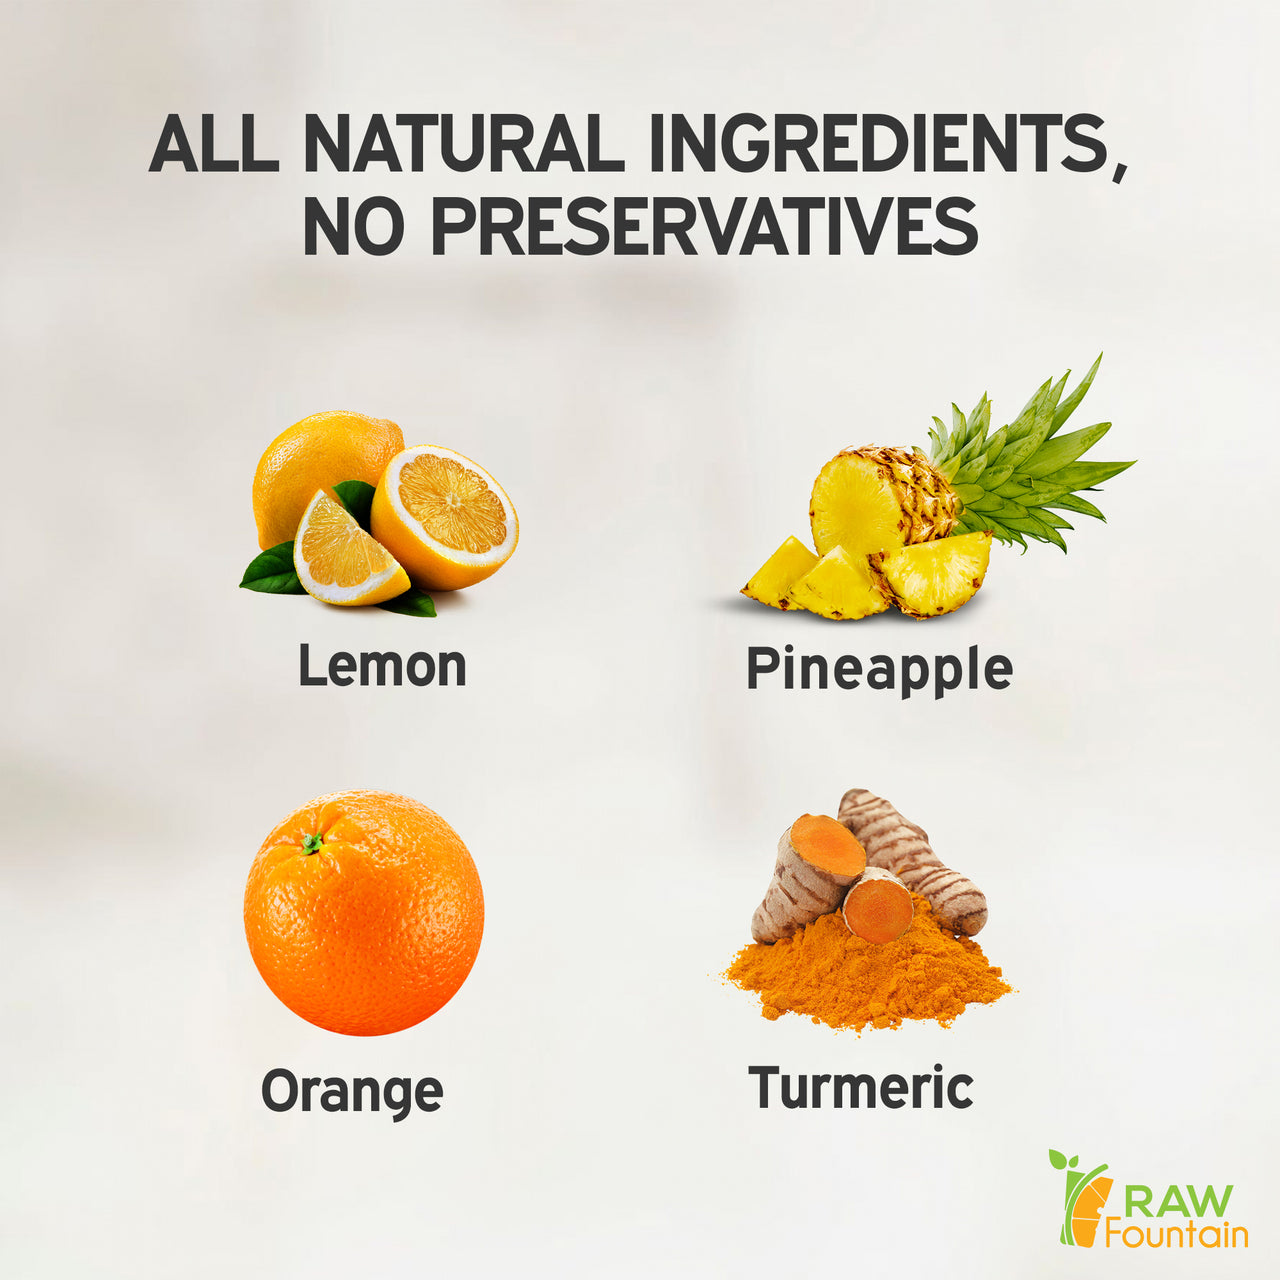 20 Immunity Shots w/ Turmeric, Lemon, Orange, Pineapple 2fl Oz, Raw and Cold Pressed